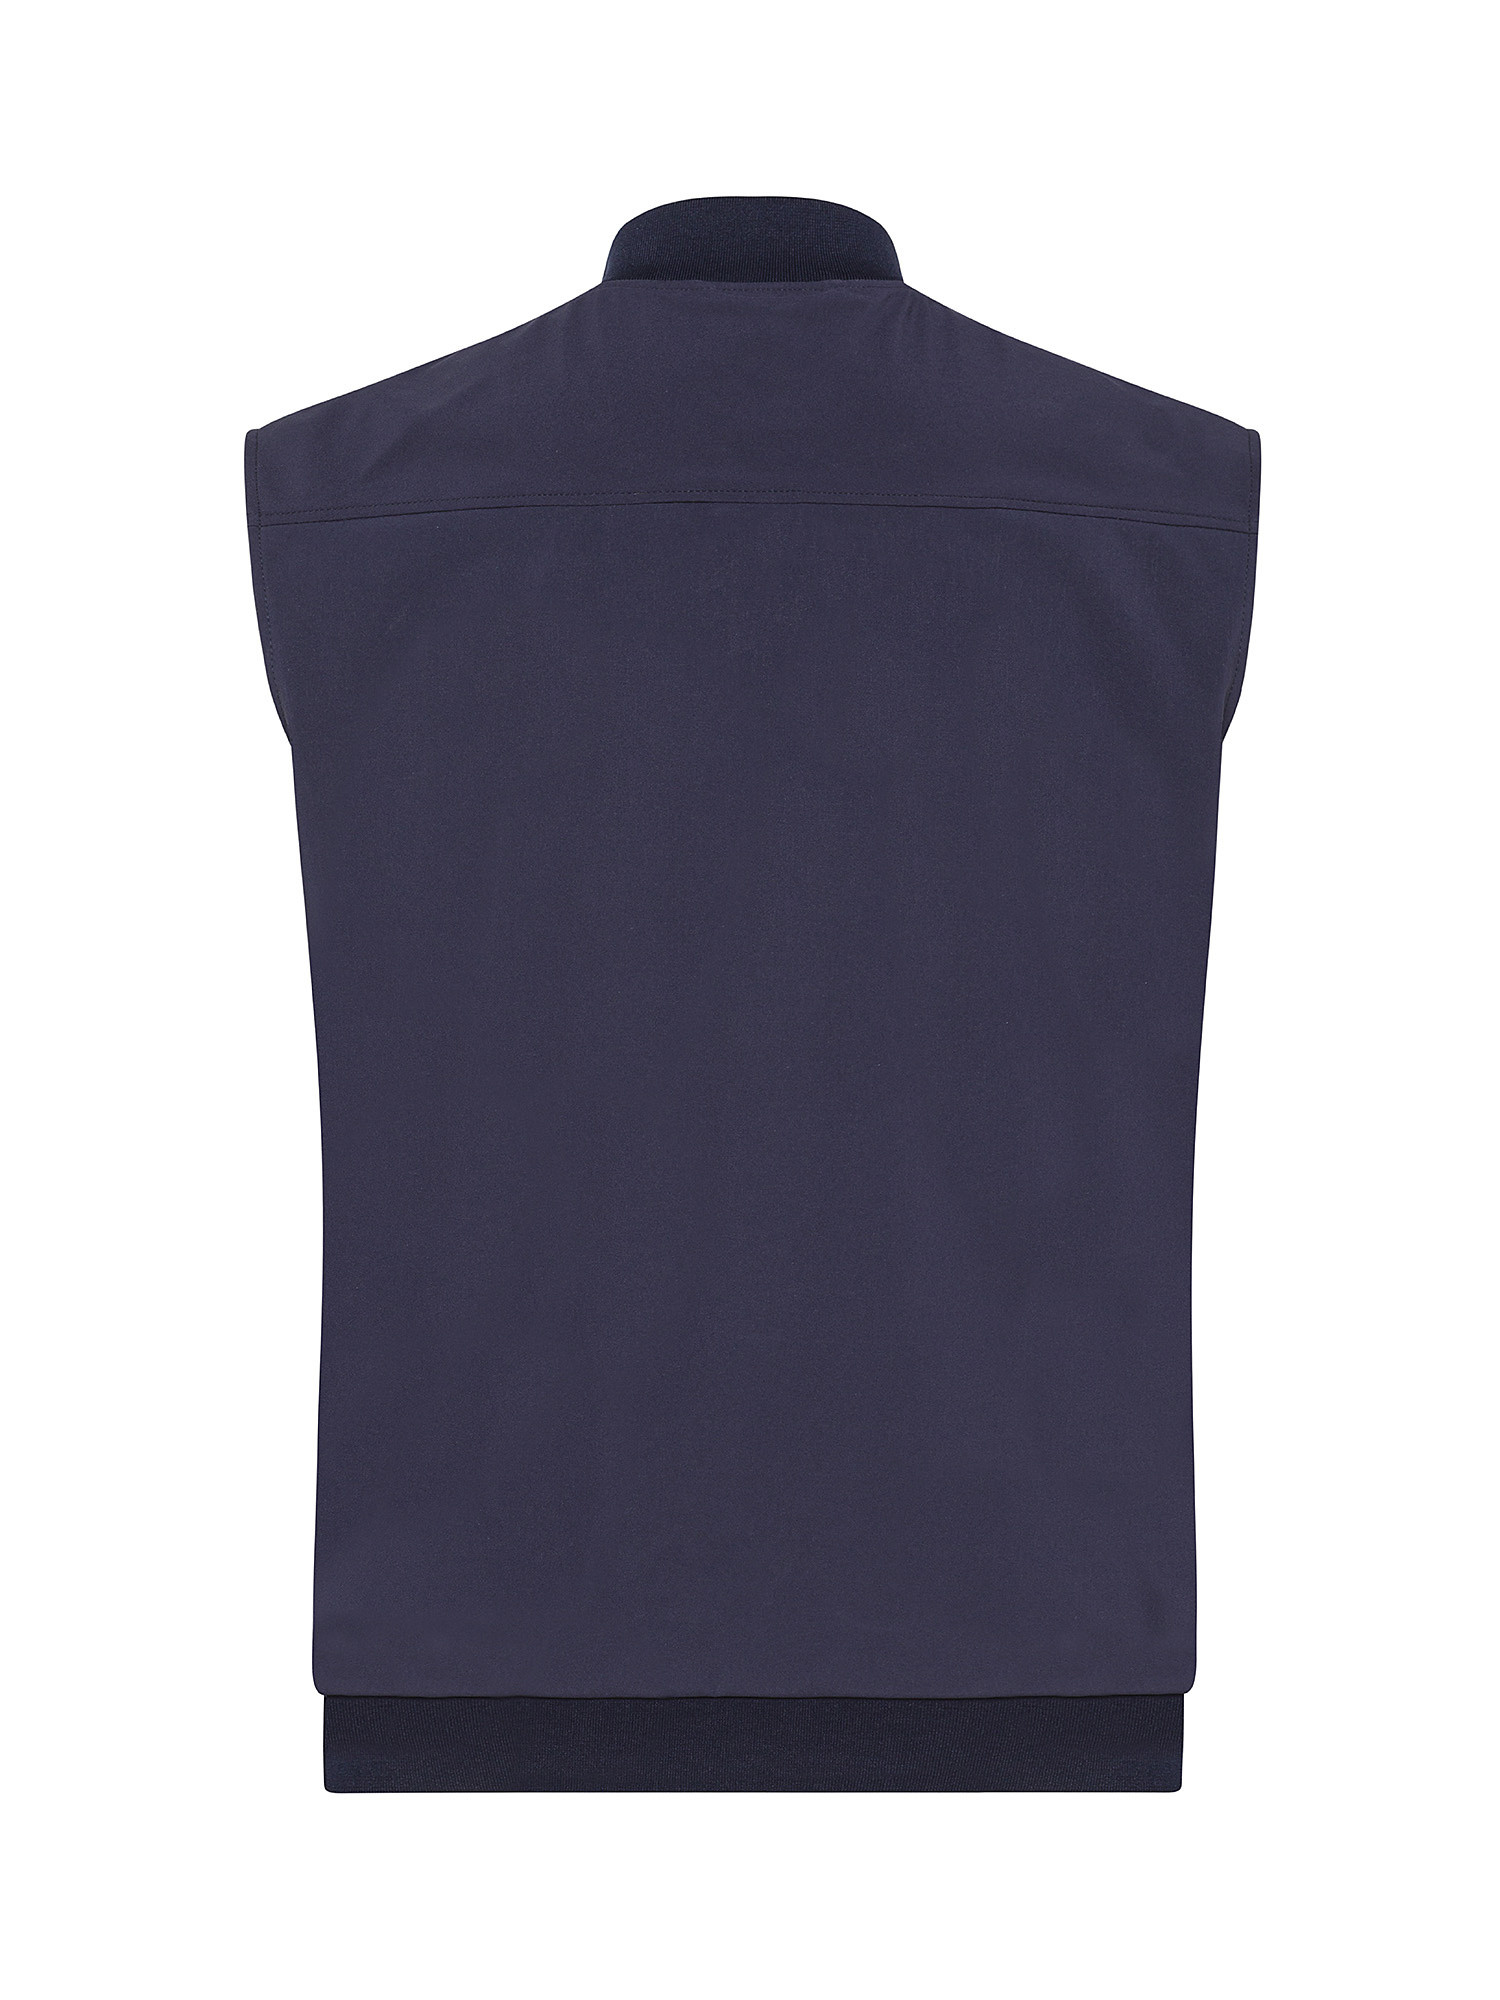 Ciesse Piumini - Waterproof Tibby vest, Dark Blue, large image number 1